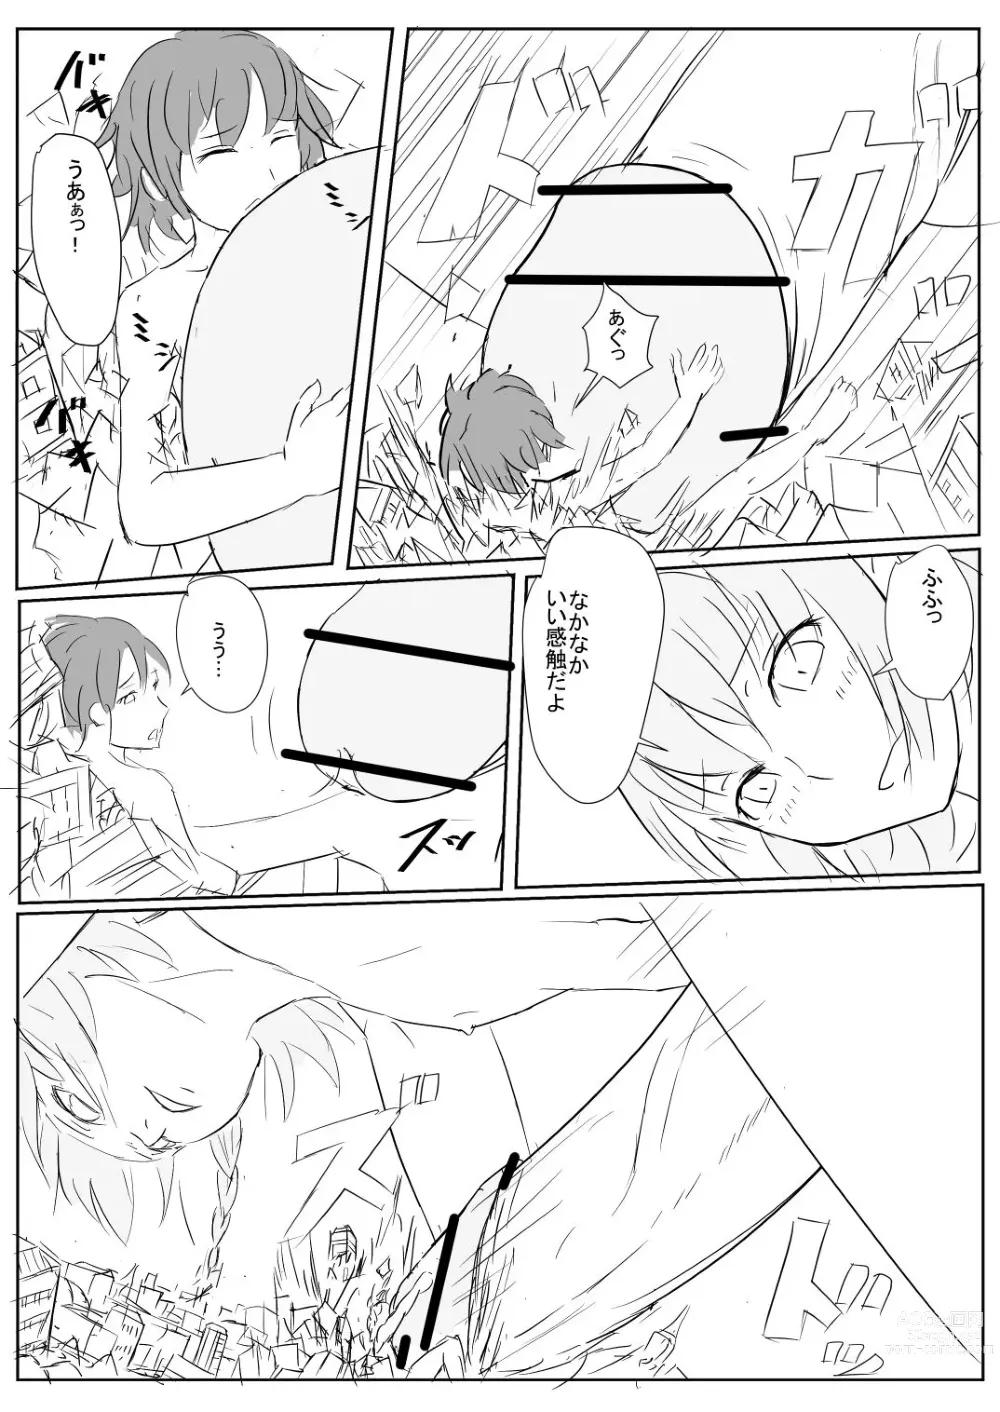 Page 15 of doujinshi Demonstration